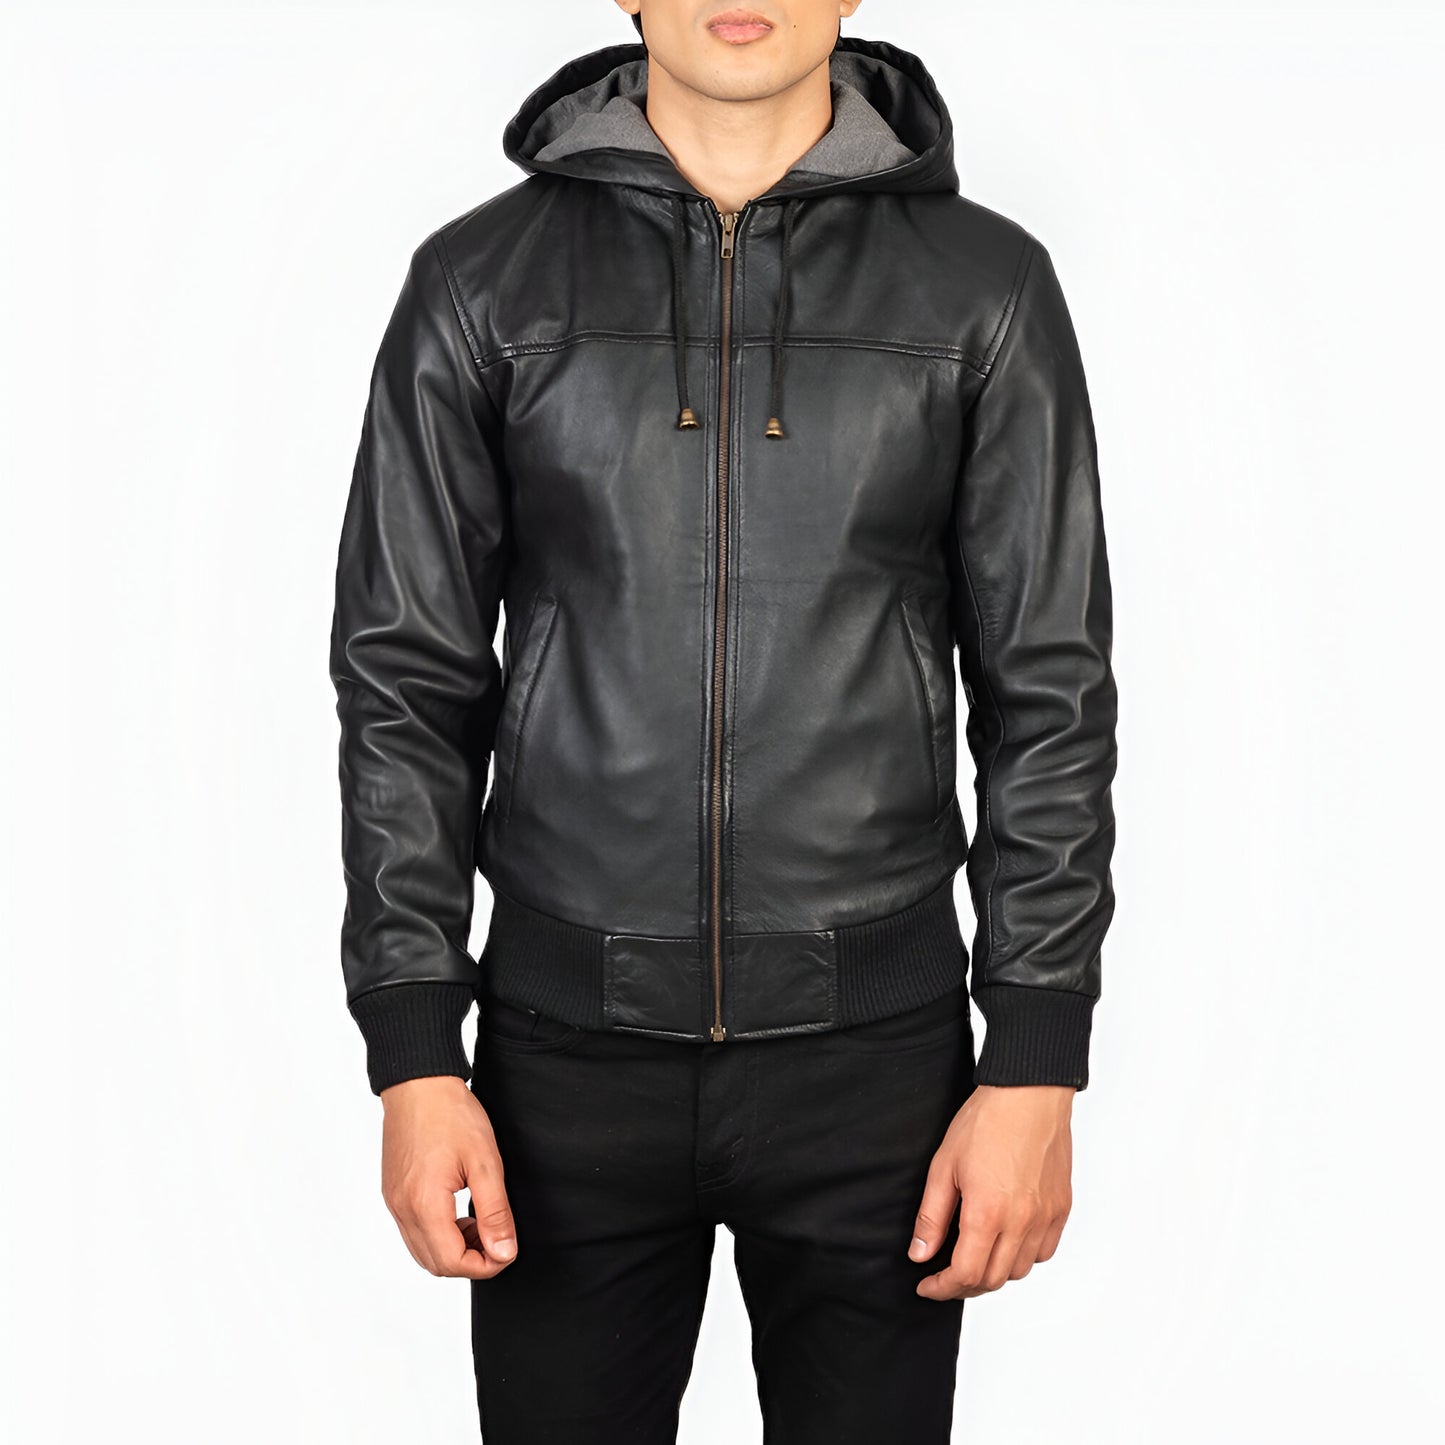 Dicks Leather Black Hooded Leather Bomber Jacket